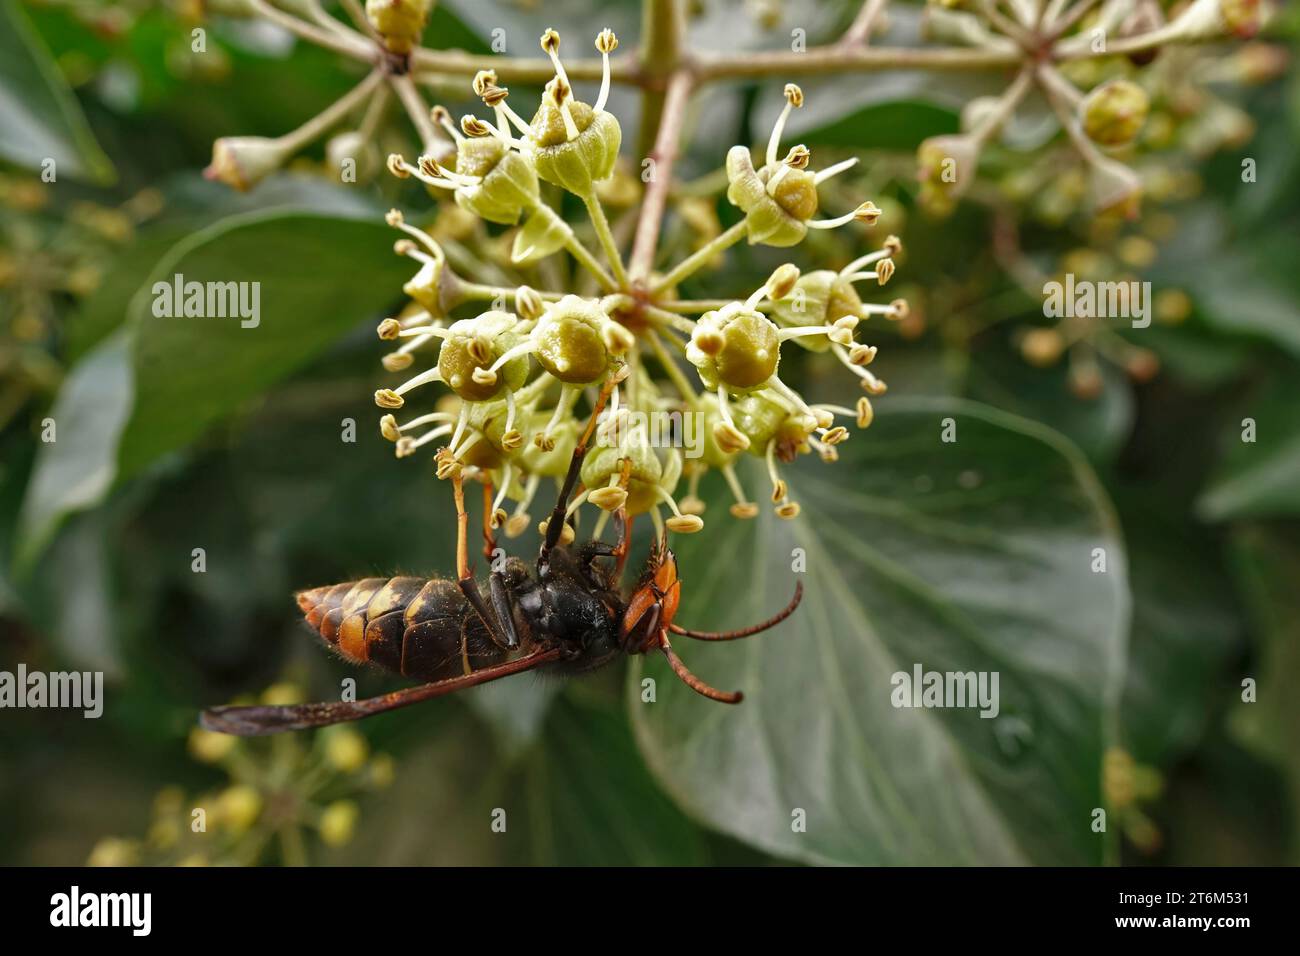 Natural closeup on the invasive Asian hornet, Vespa velutina on an Ivy flower Stock Photo